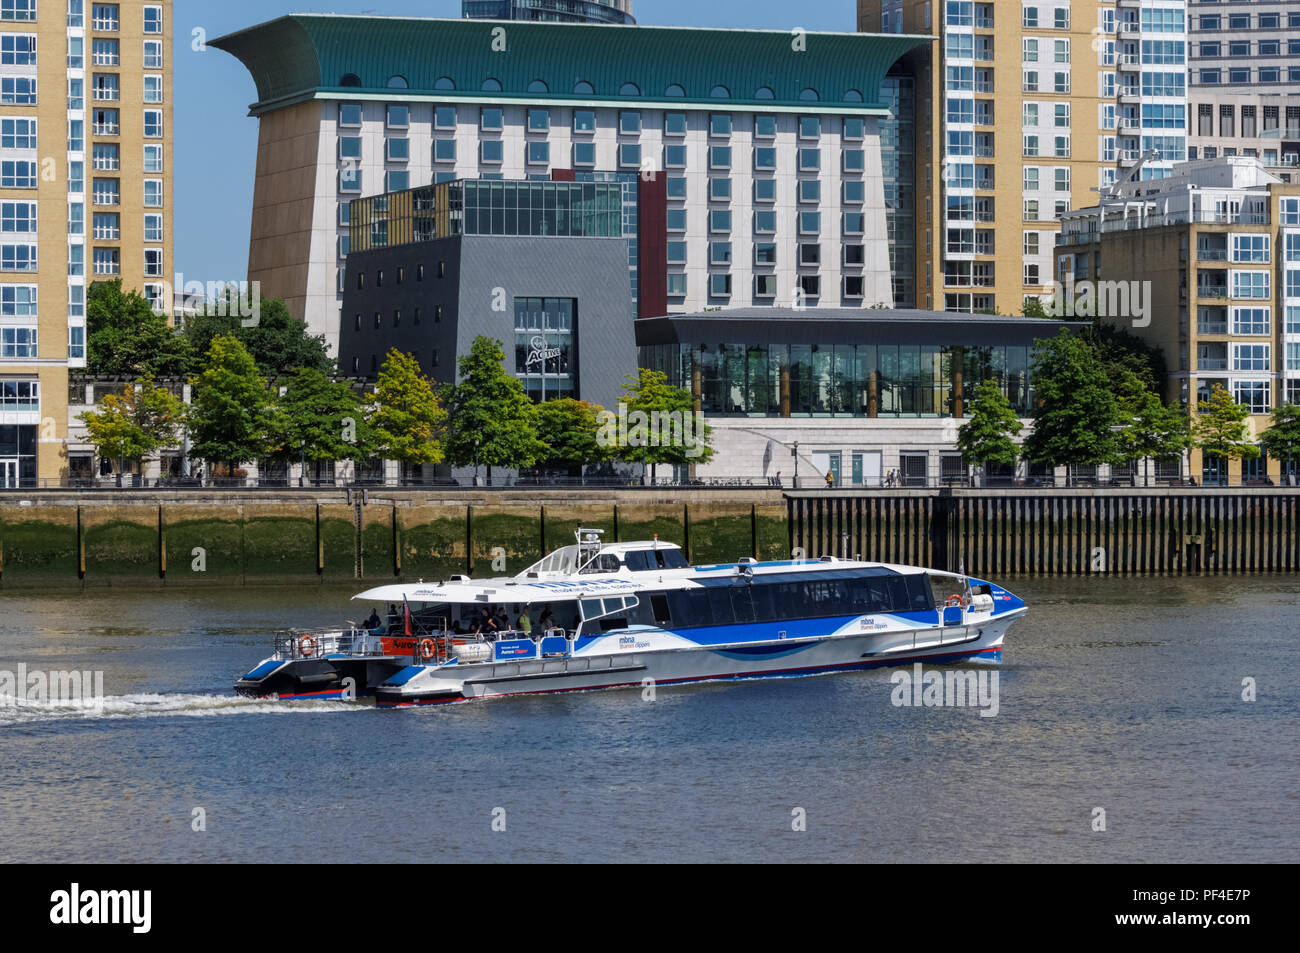 Thames clipper à Canary Wharf, London England Royaume-Uni UK Banque D'Images